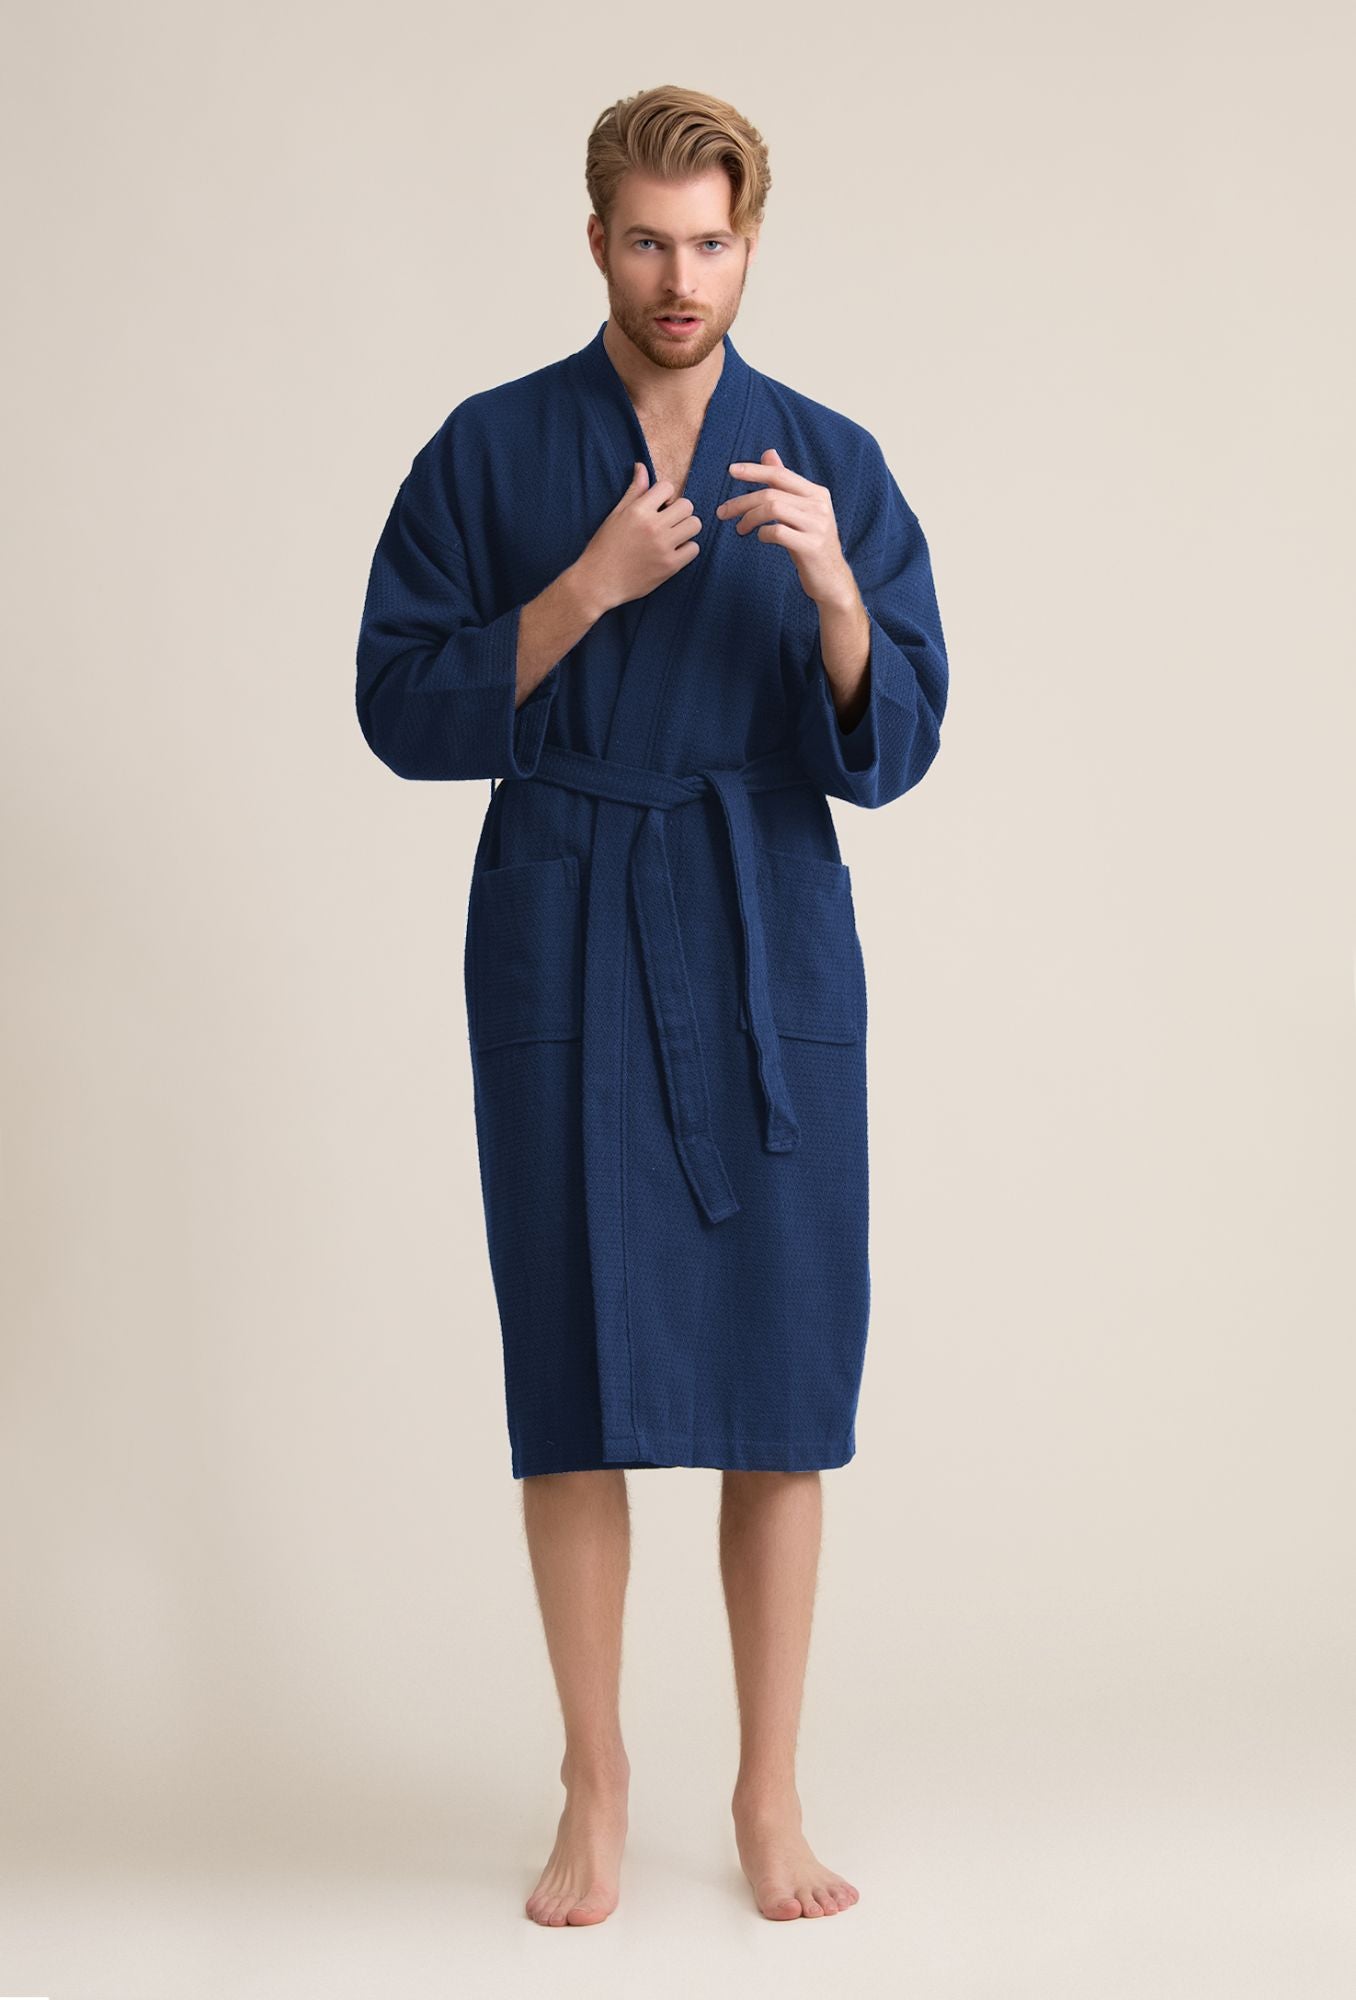 Ham &Sam Men's Robe Knit Bamboo Cotton Long Bathrobe Spa Sleepwear Soft NEW  Navy